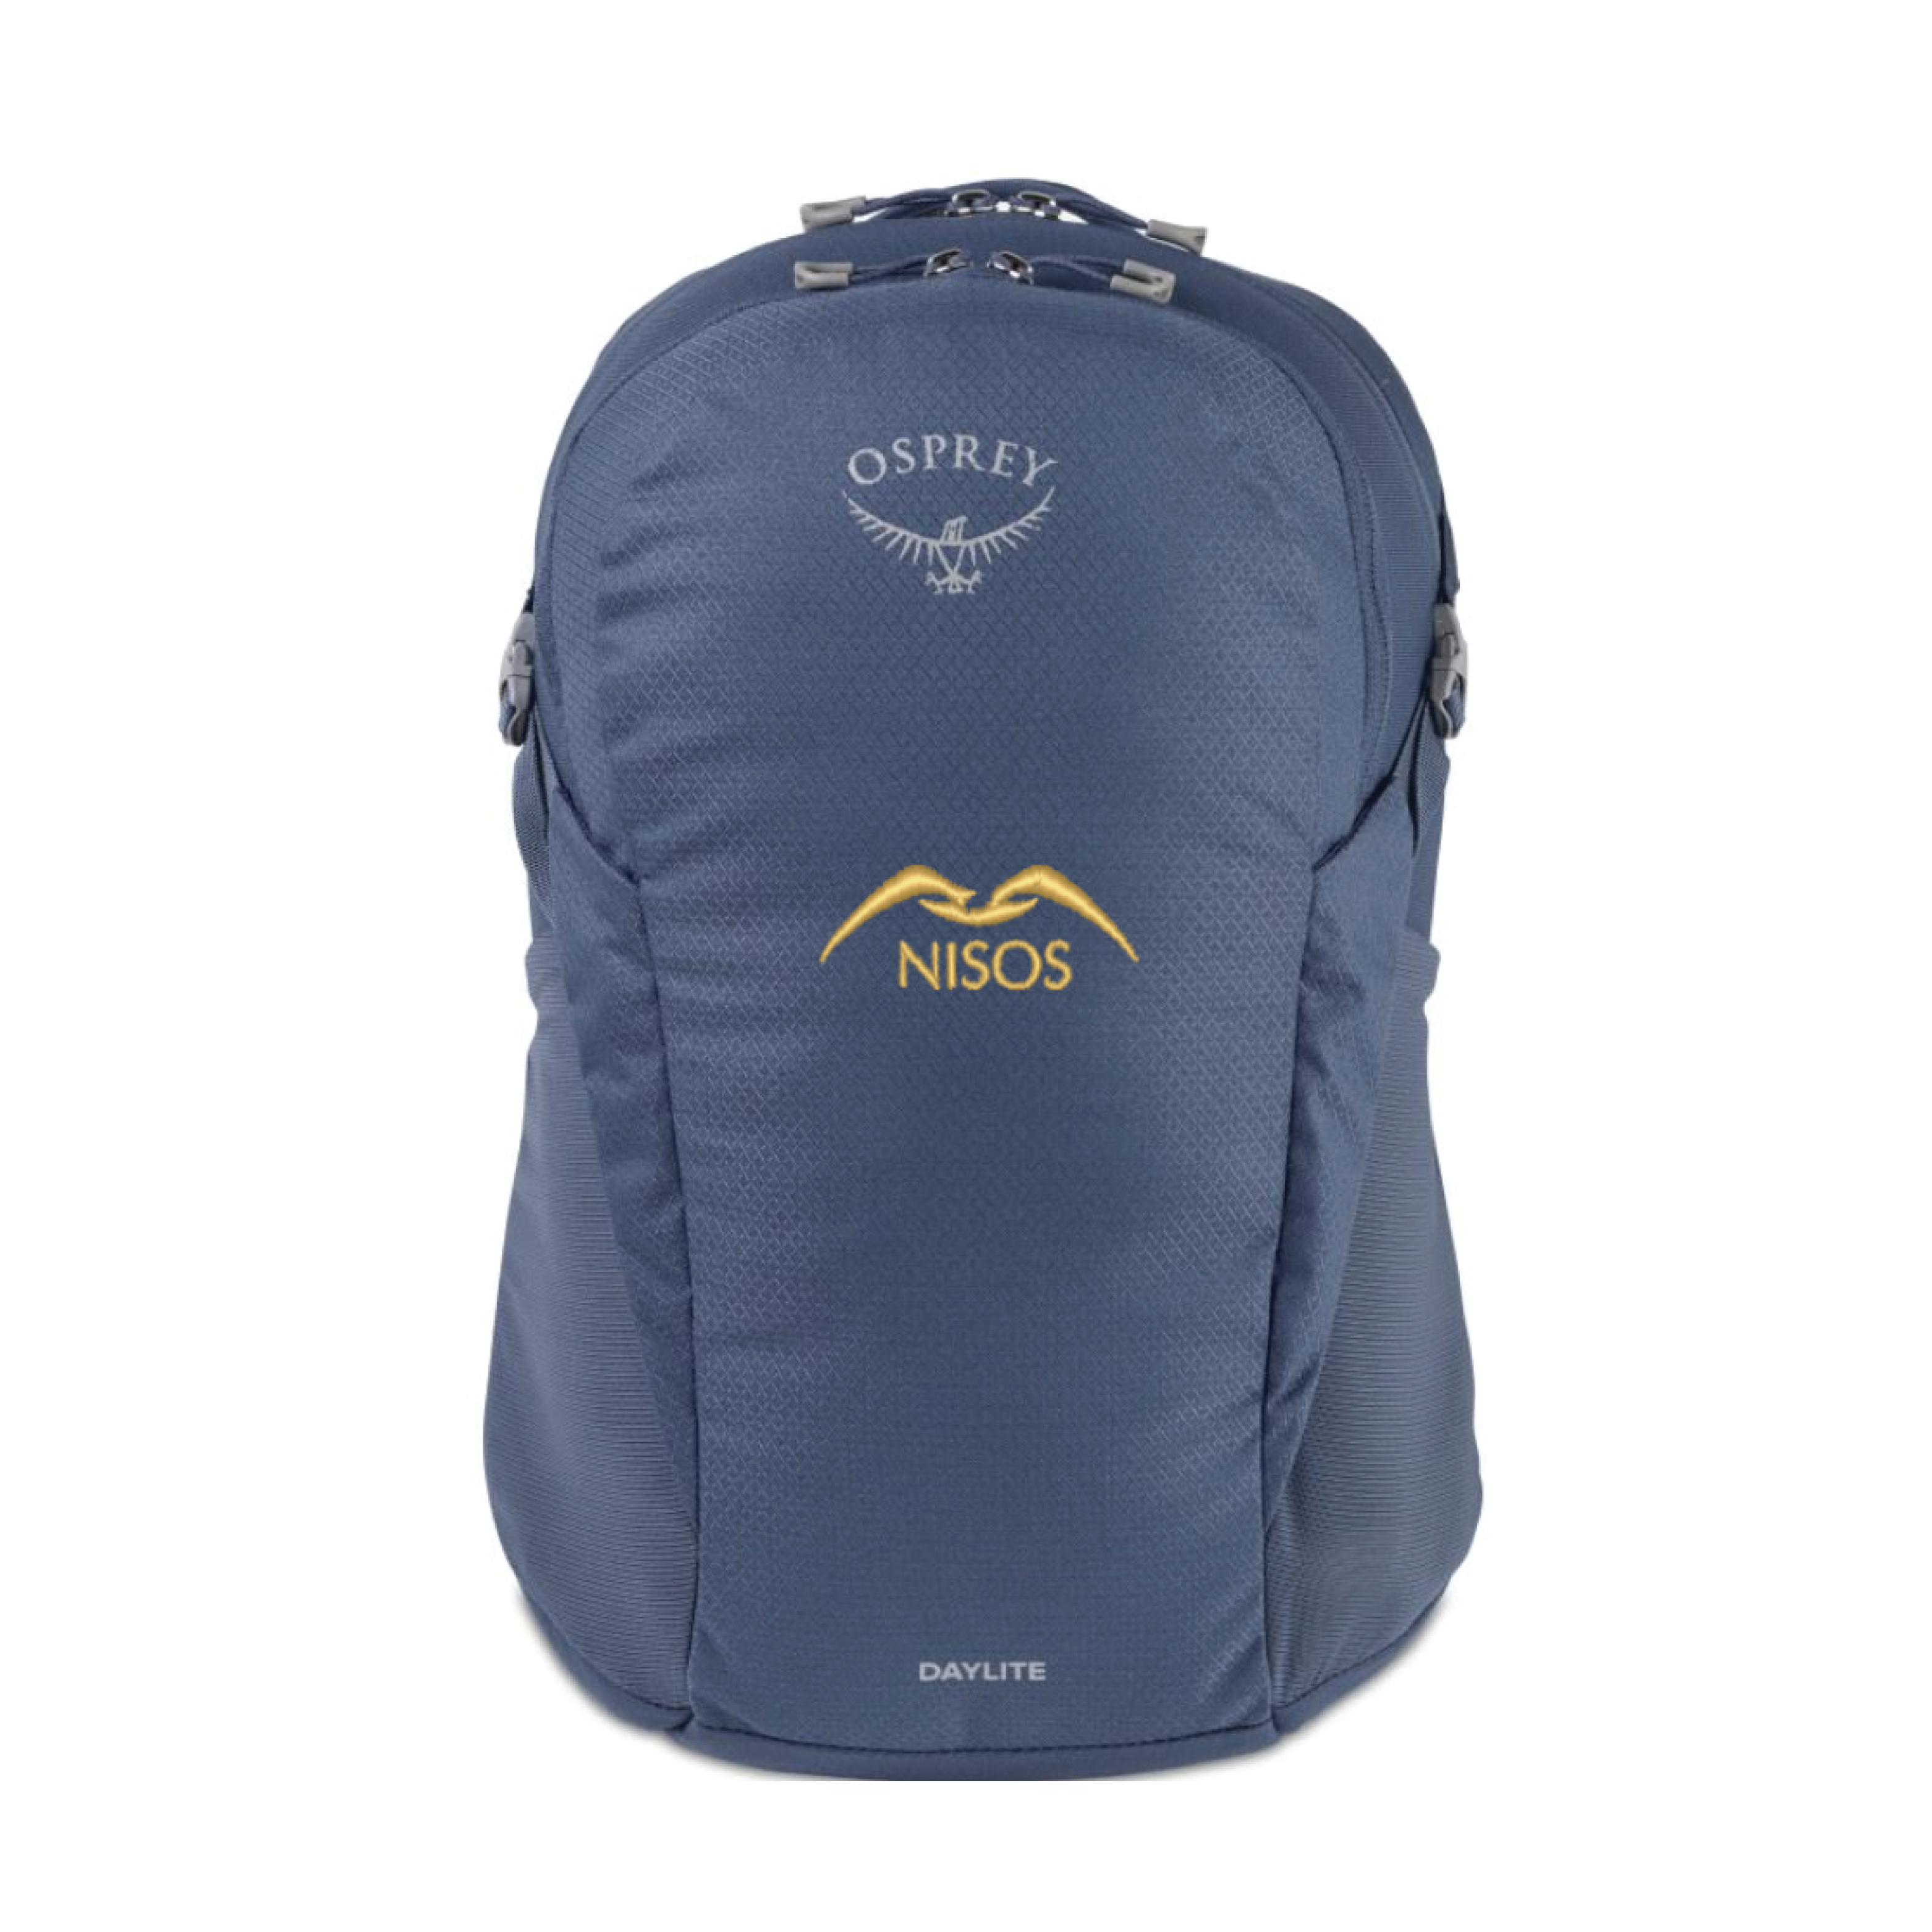 Nisos Osprey Backpack in Navy